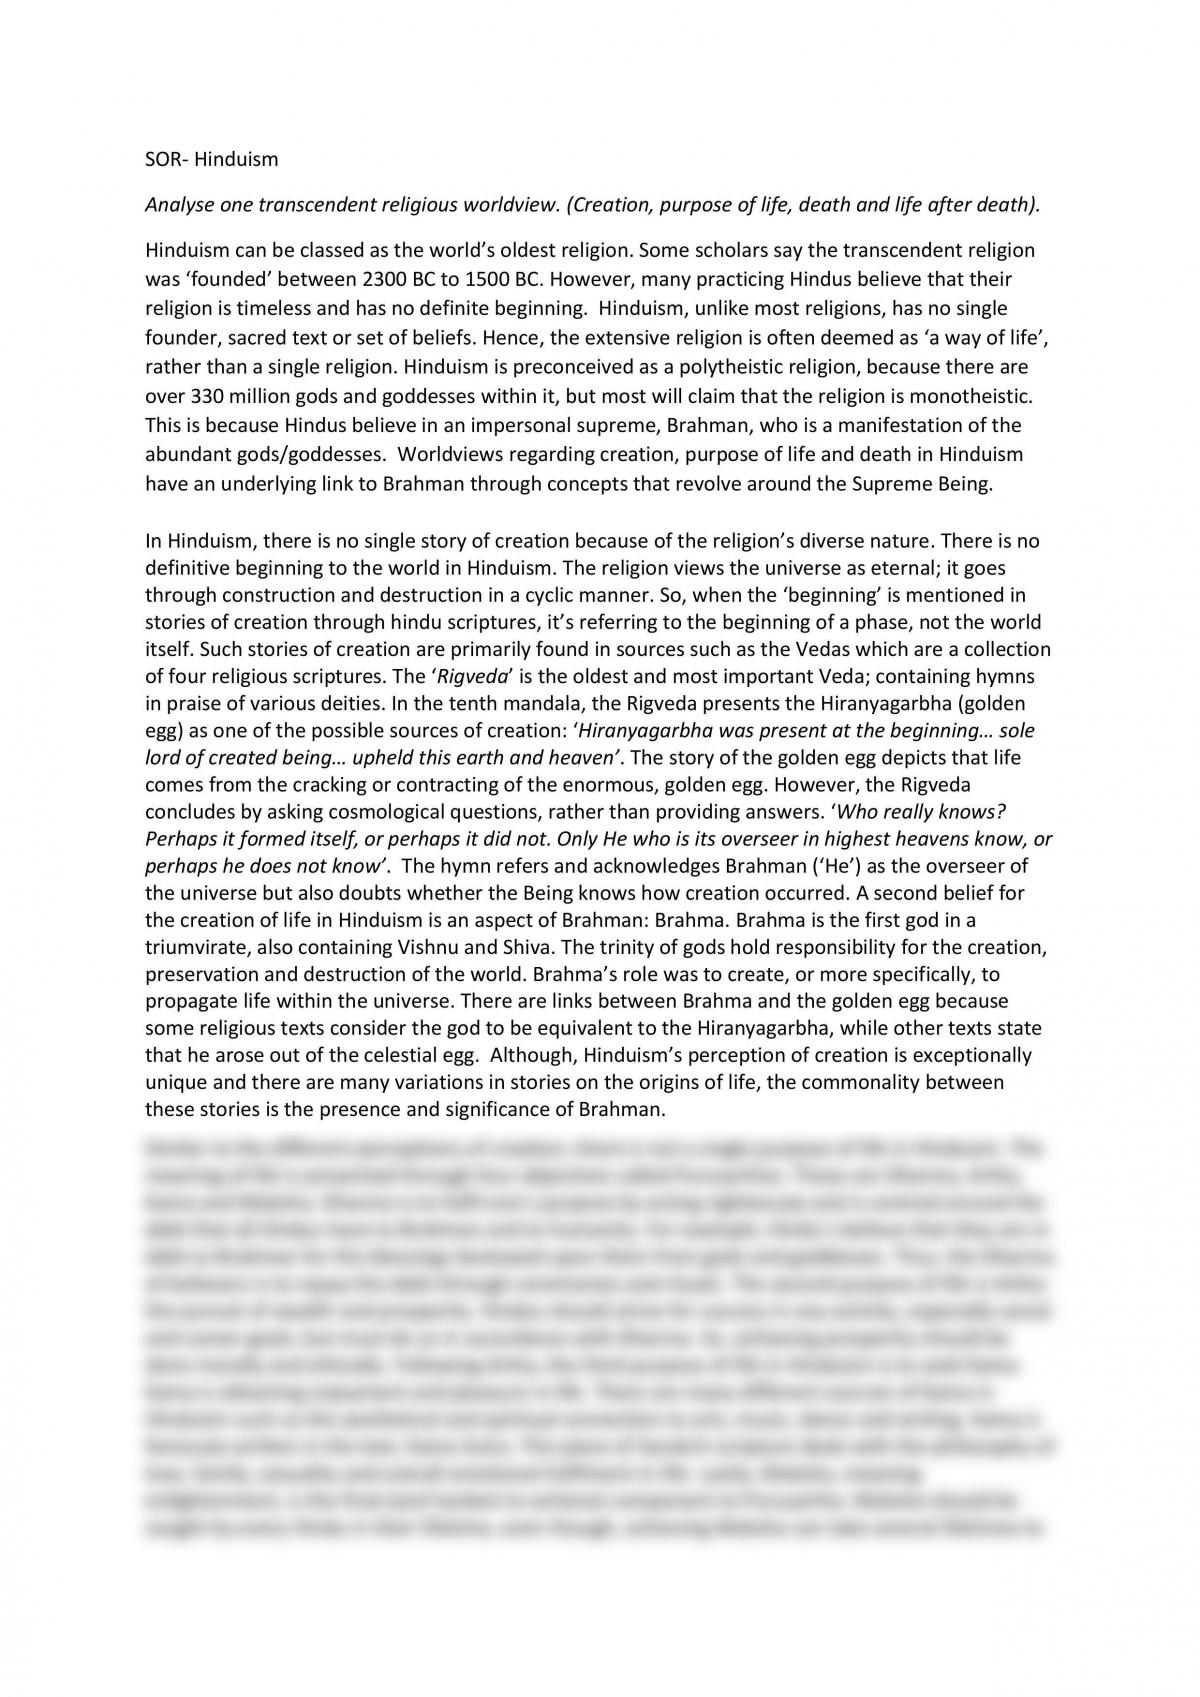 hinduism essay pdf